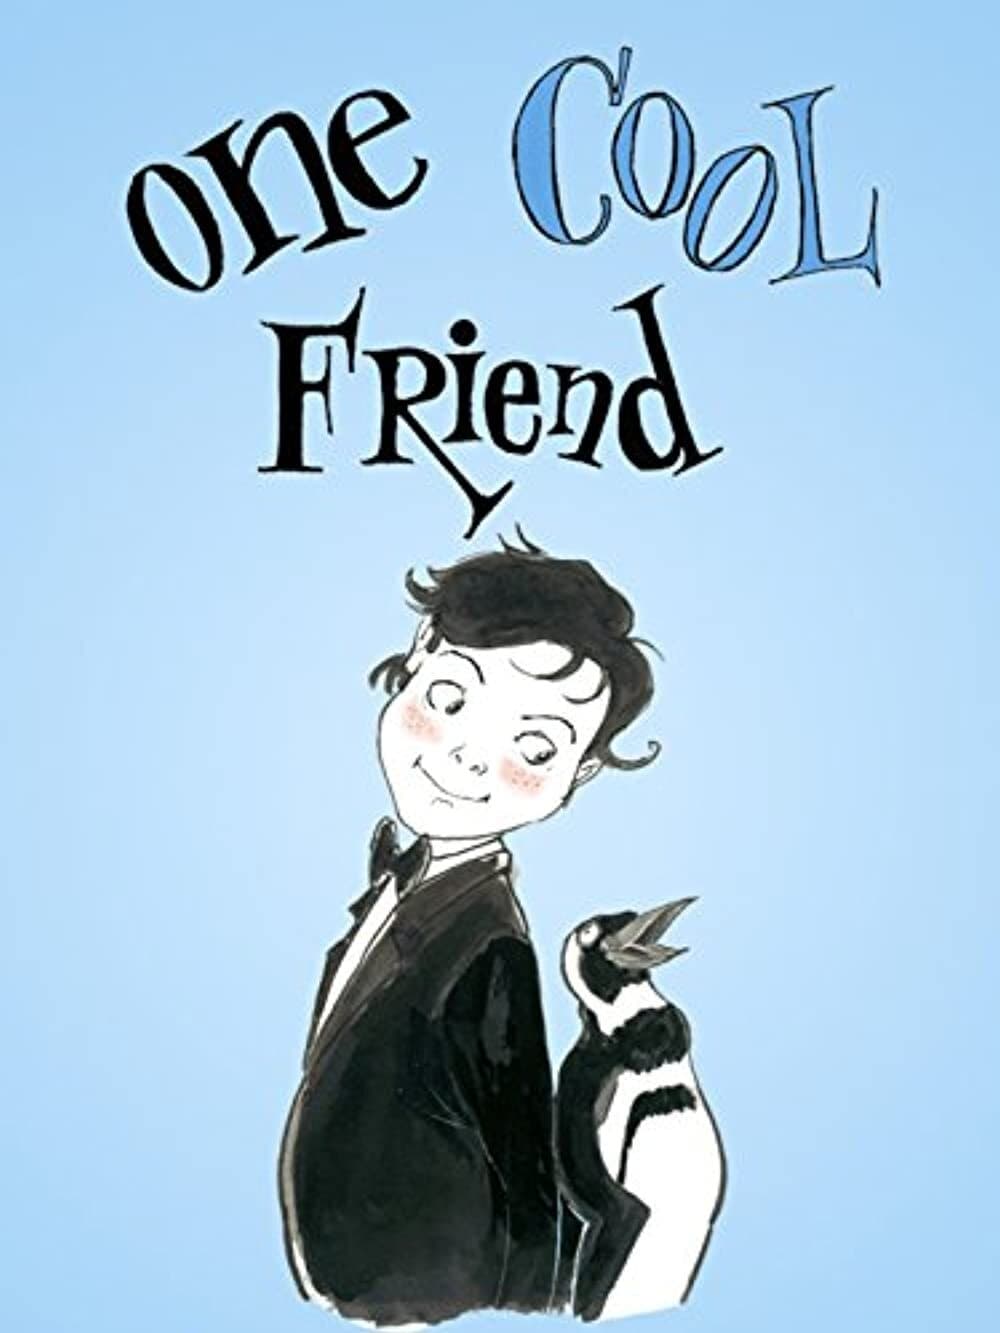 One Cool Friend (2015)